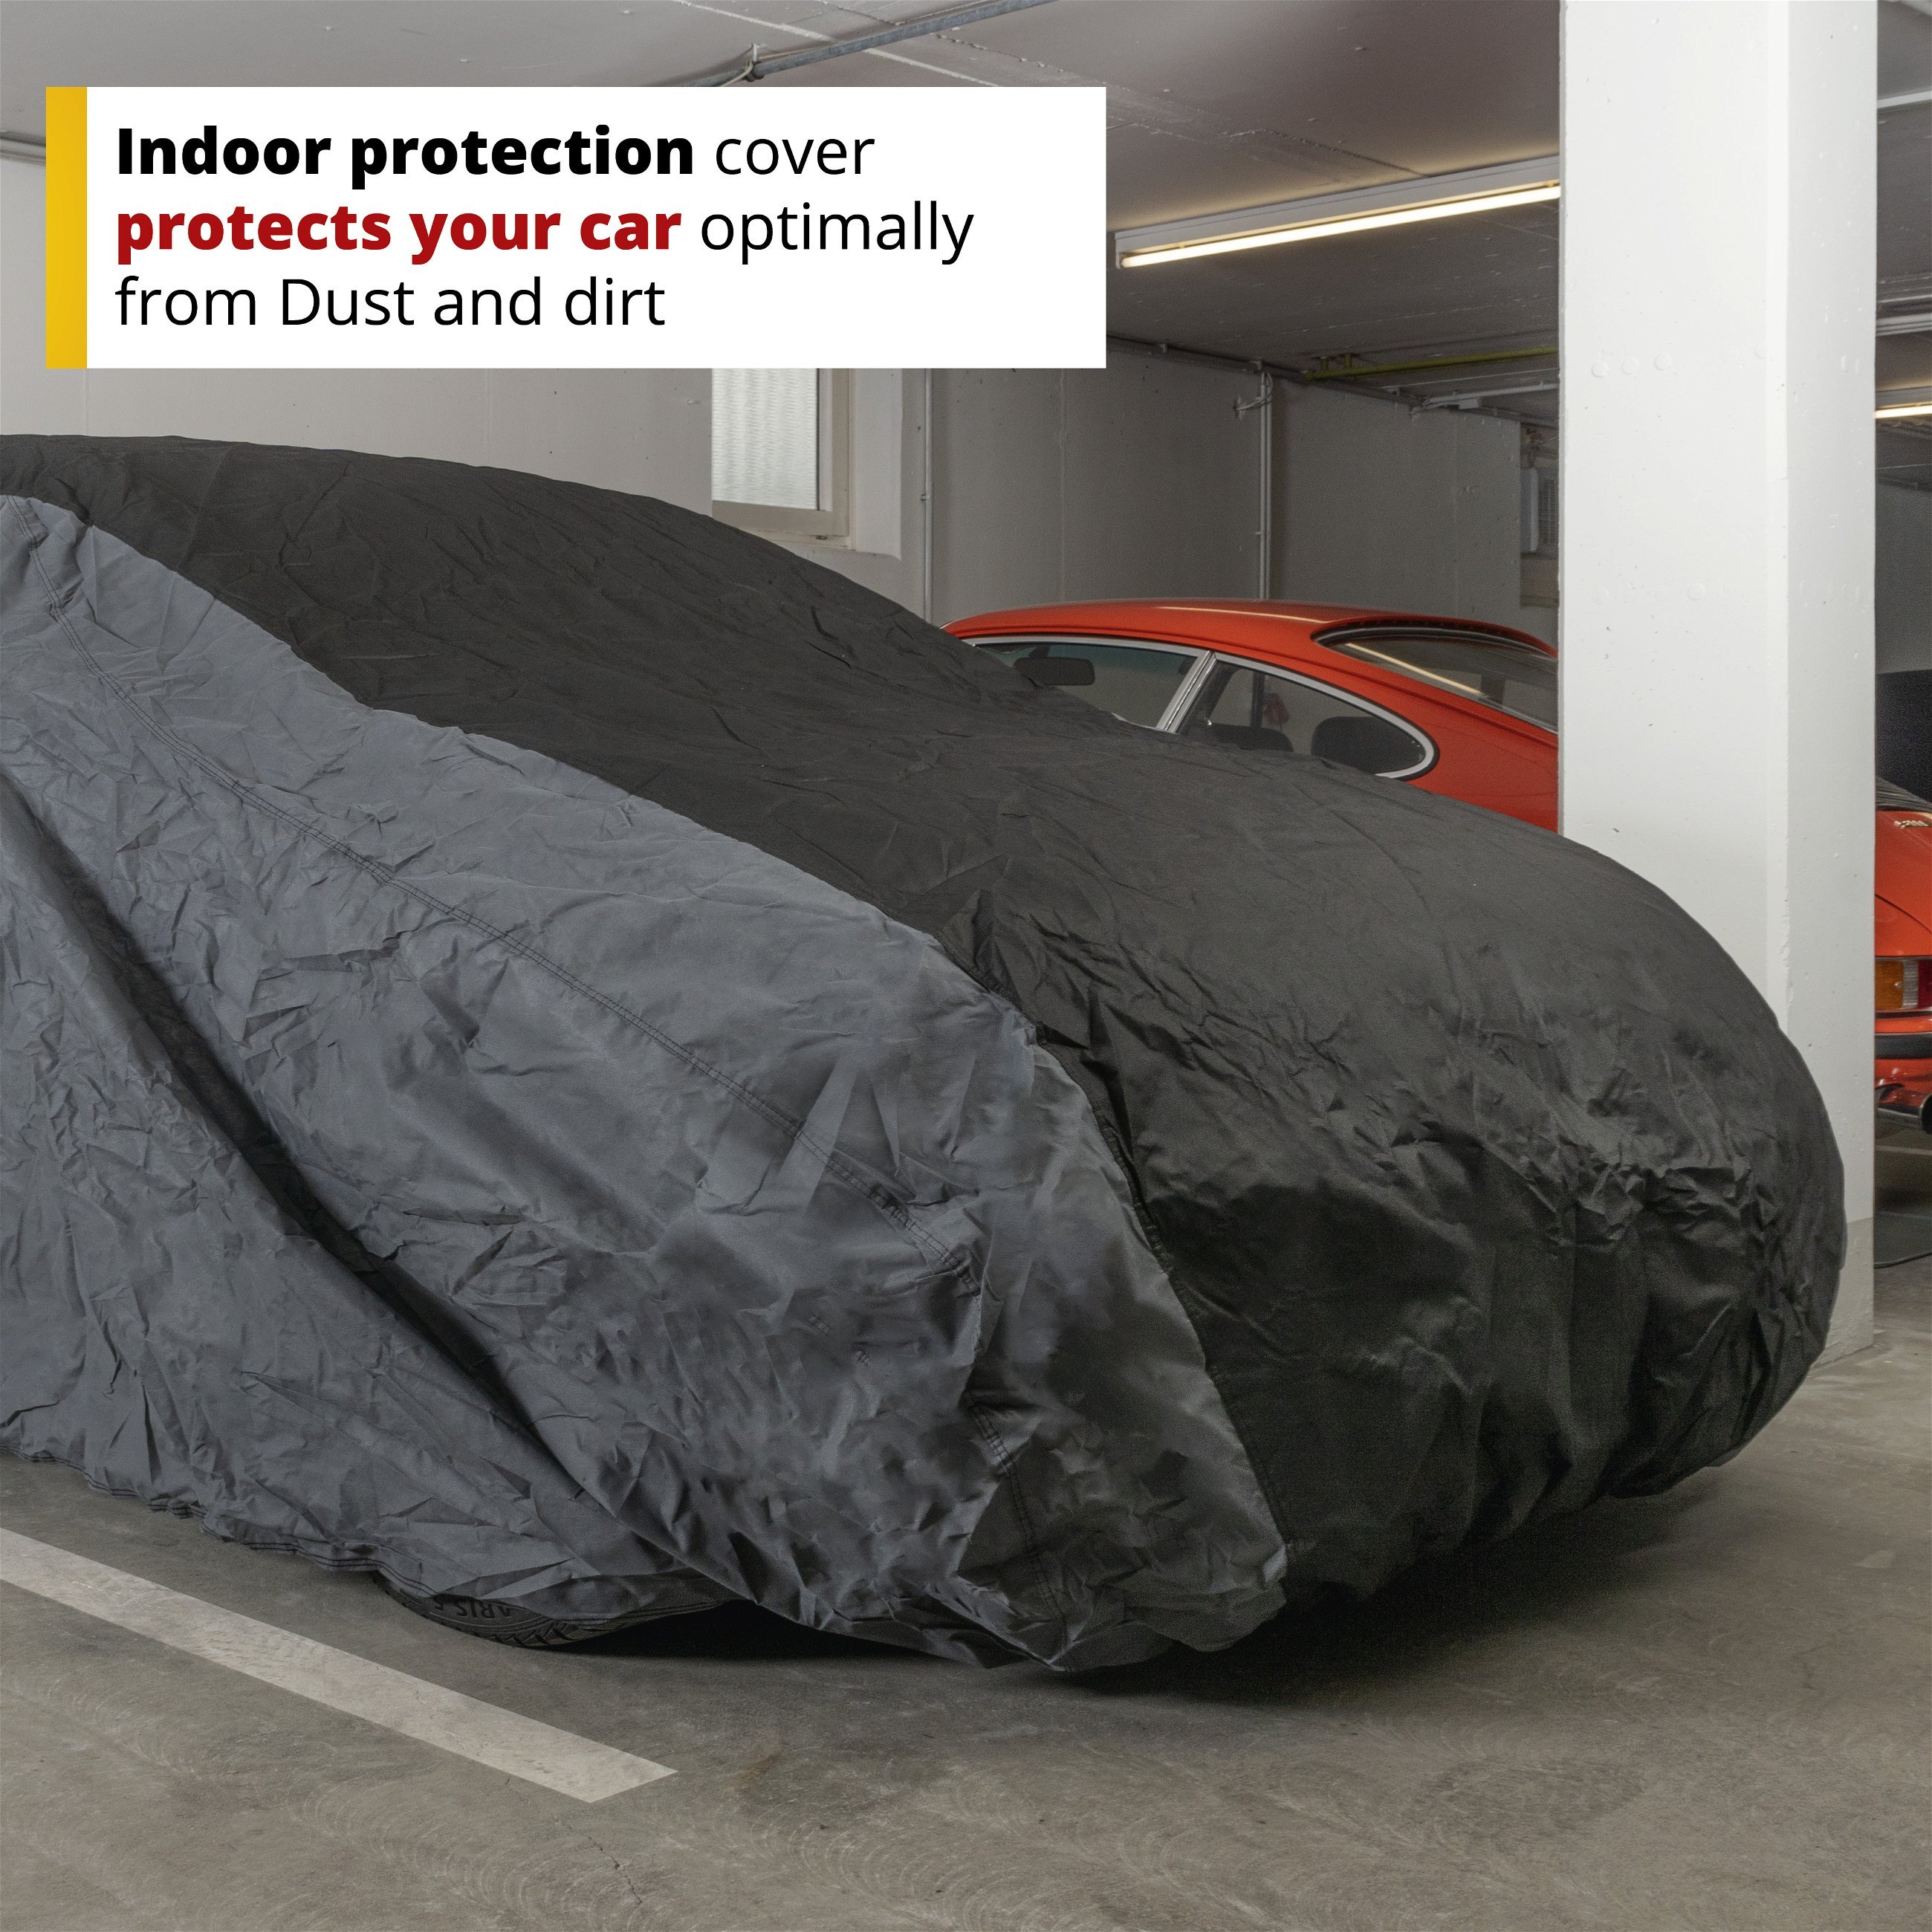 Car cover Indoor Eco combi size XL grey/black